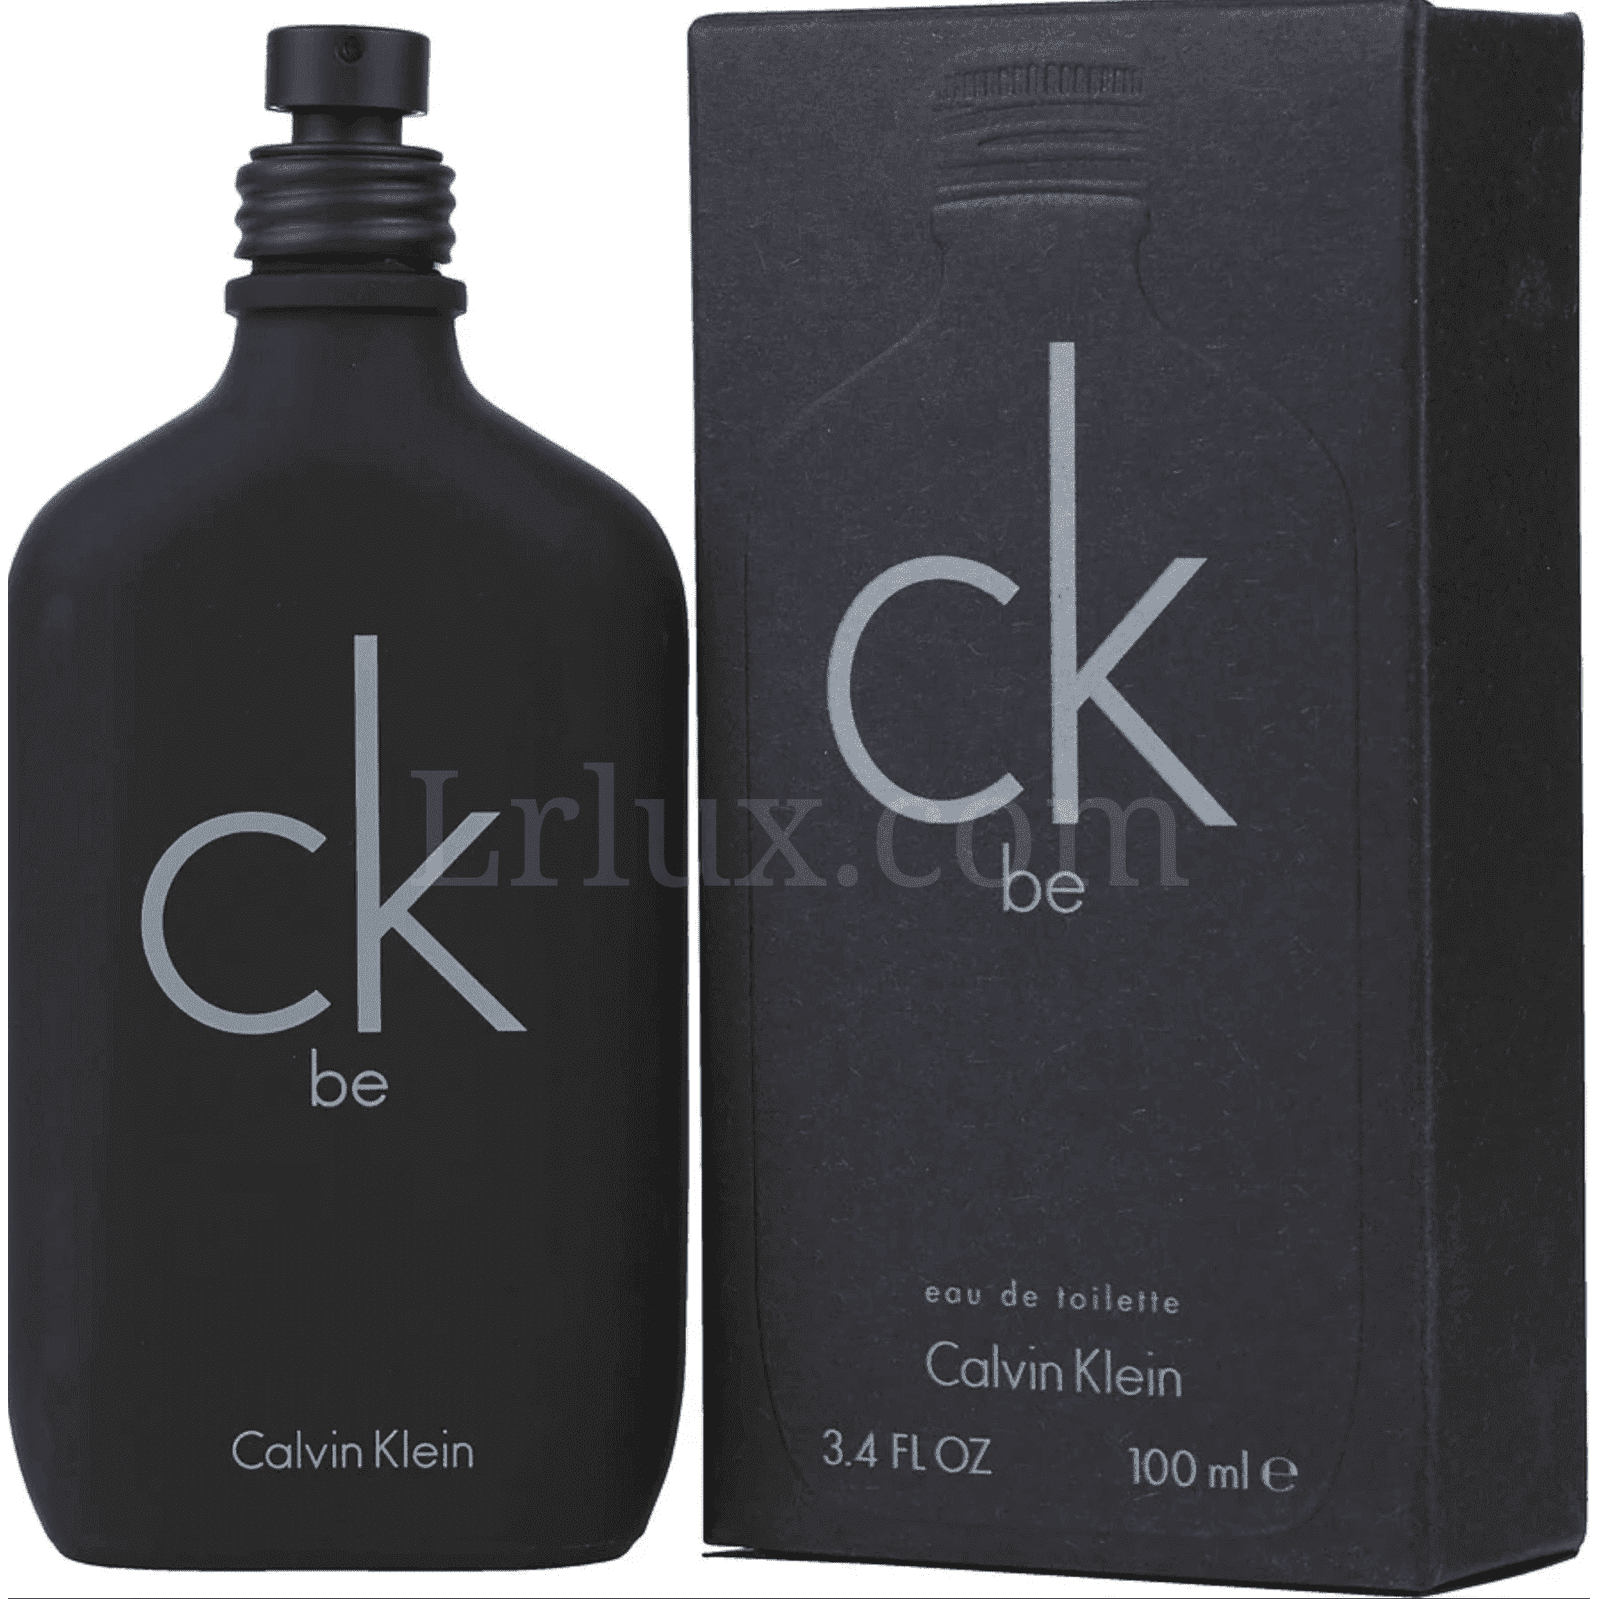 CK BE by Calvin Klein - Lrlux.com